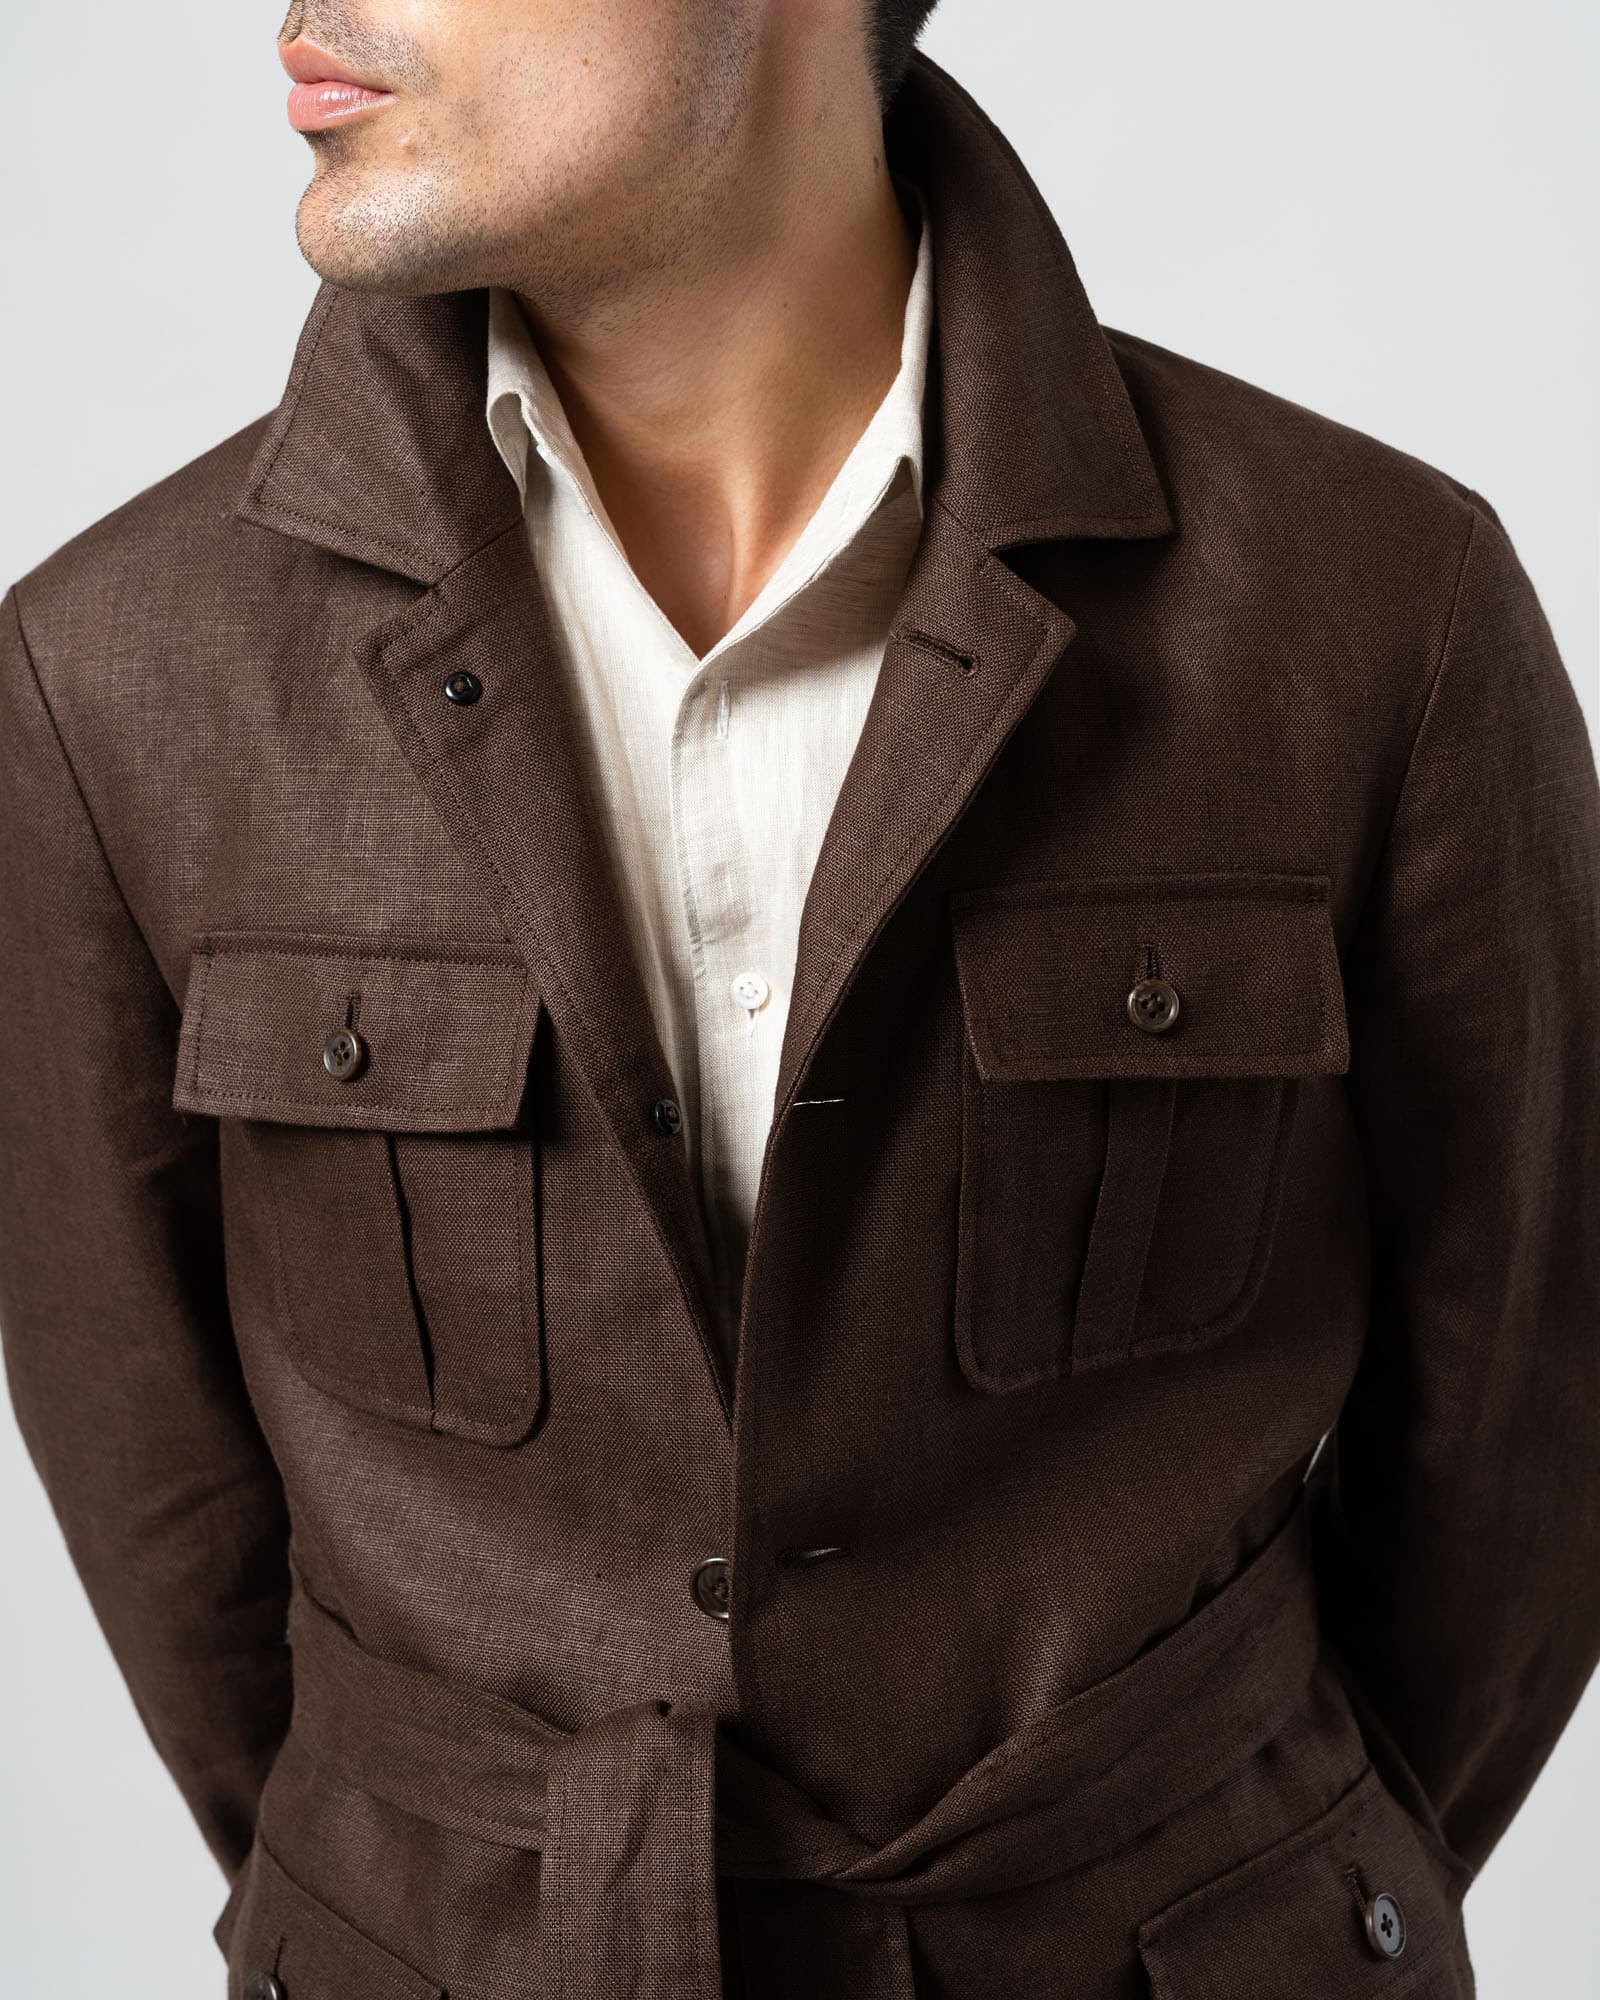 Belted safari jacket linen dark brown image 6